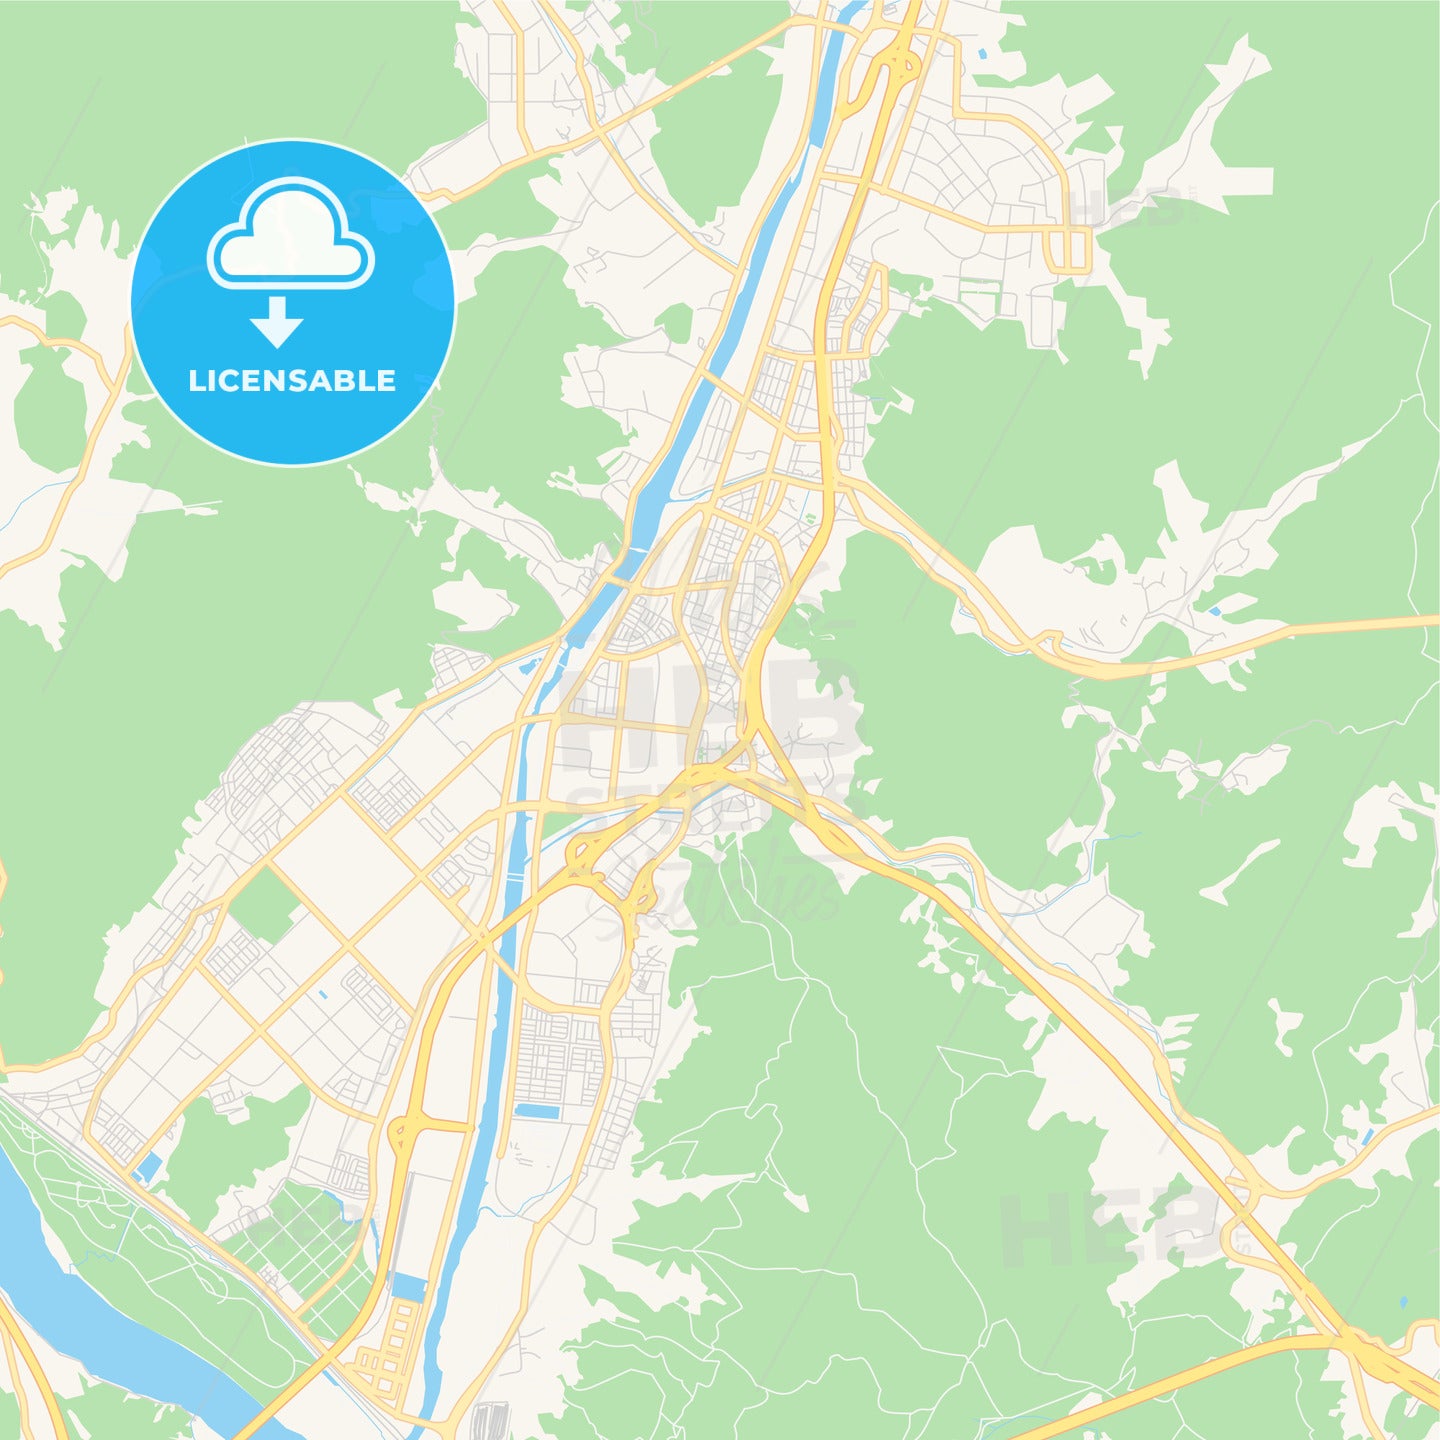 Printable street map of Yangsan, South Korea